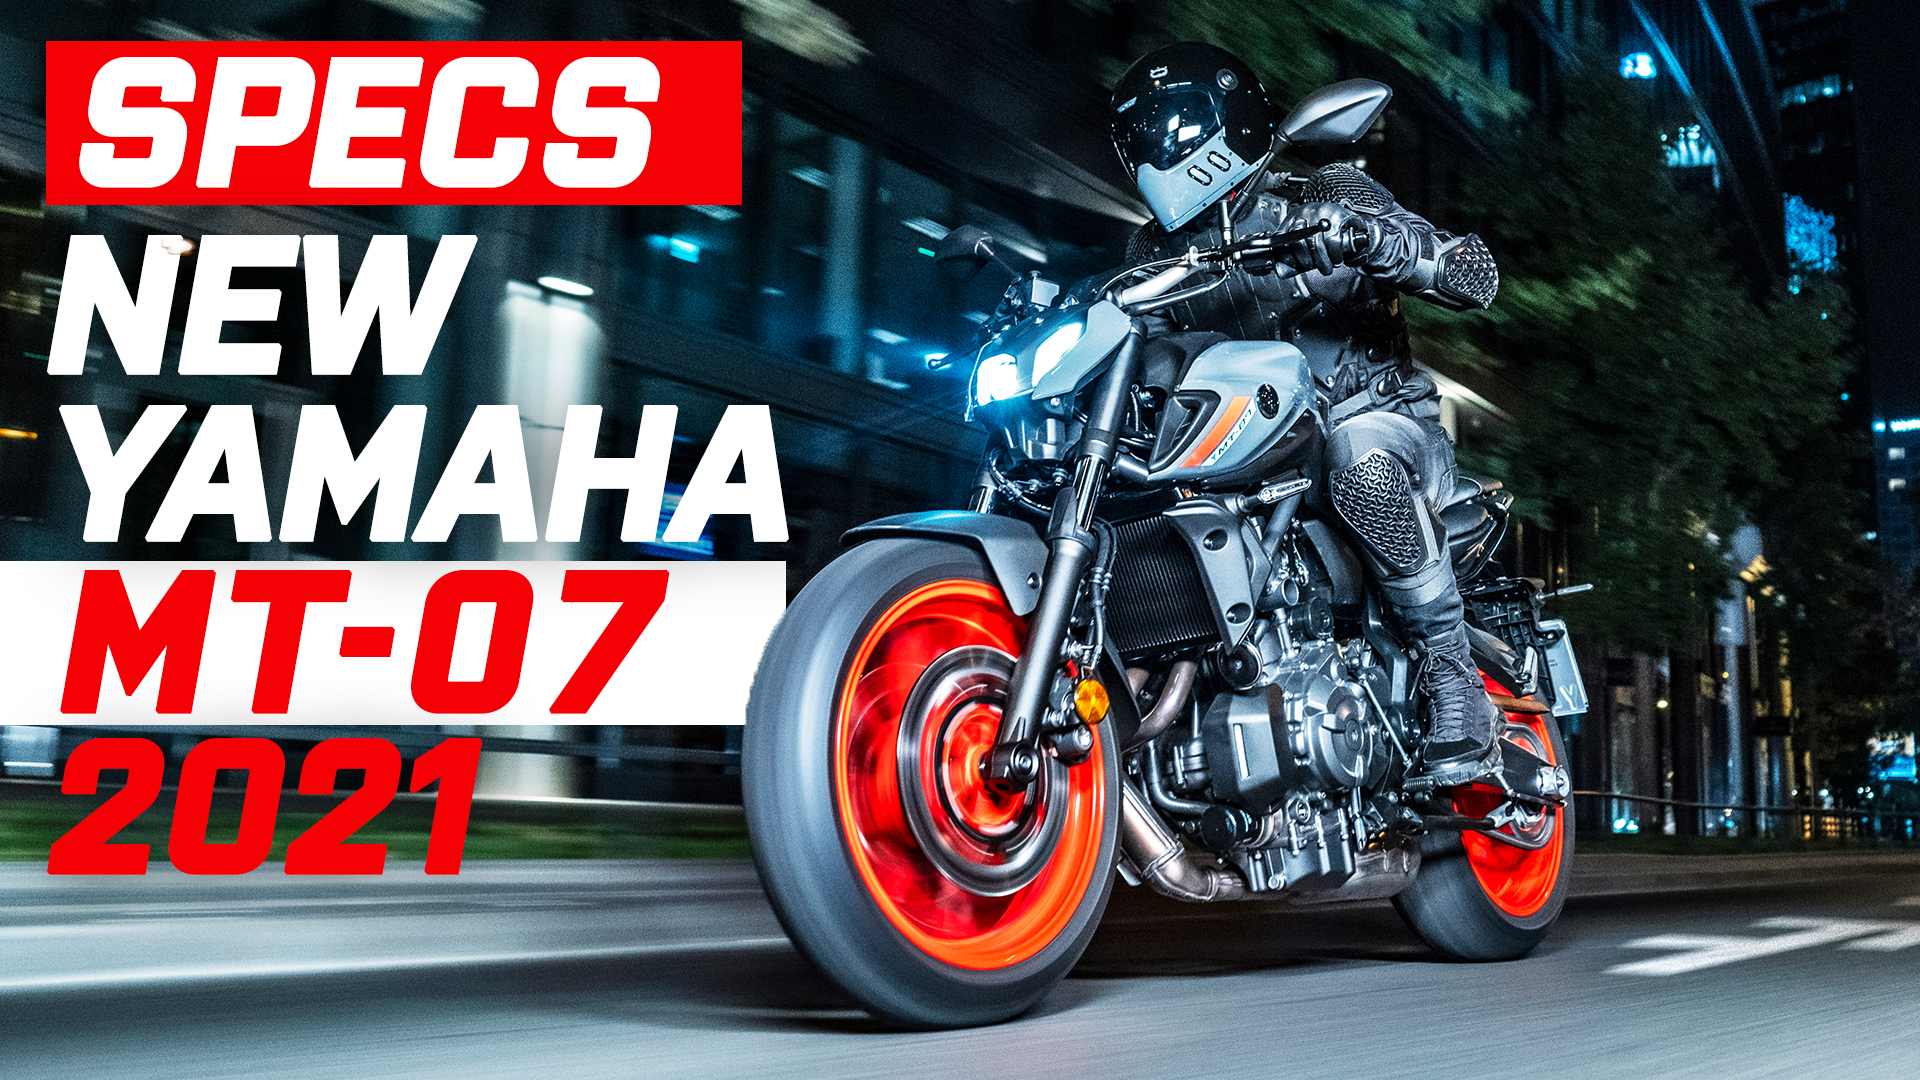 2021 Yamaha MT-07 Buyer's Guide: Specs, Photos, Price